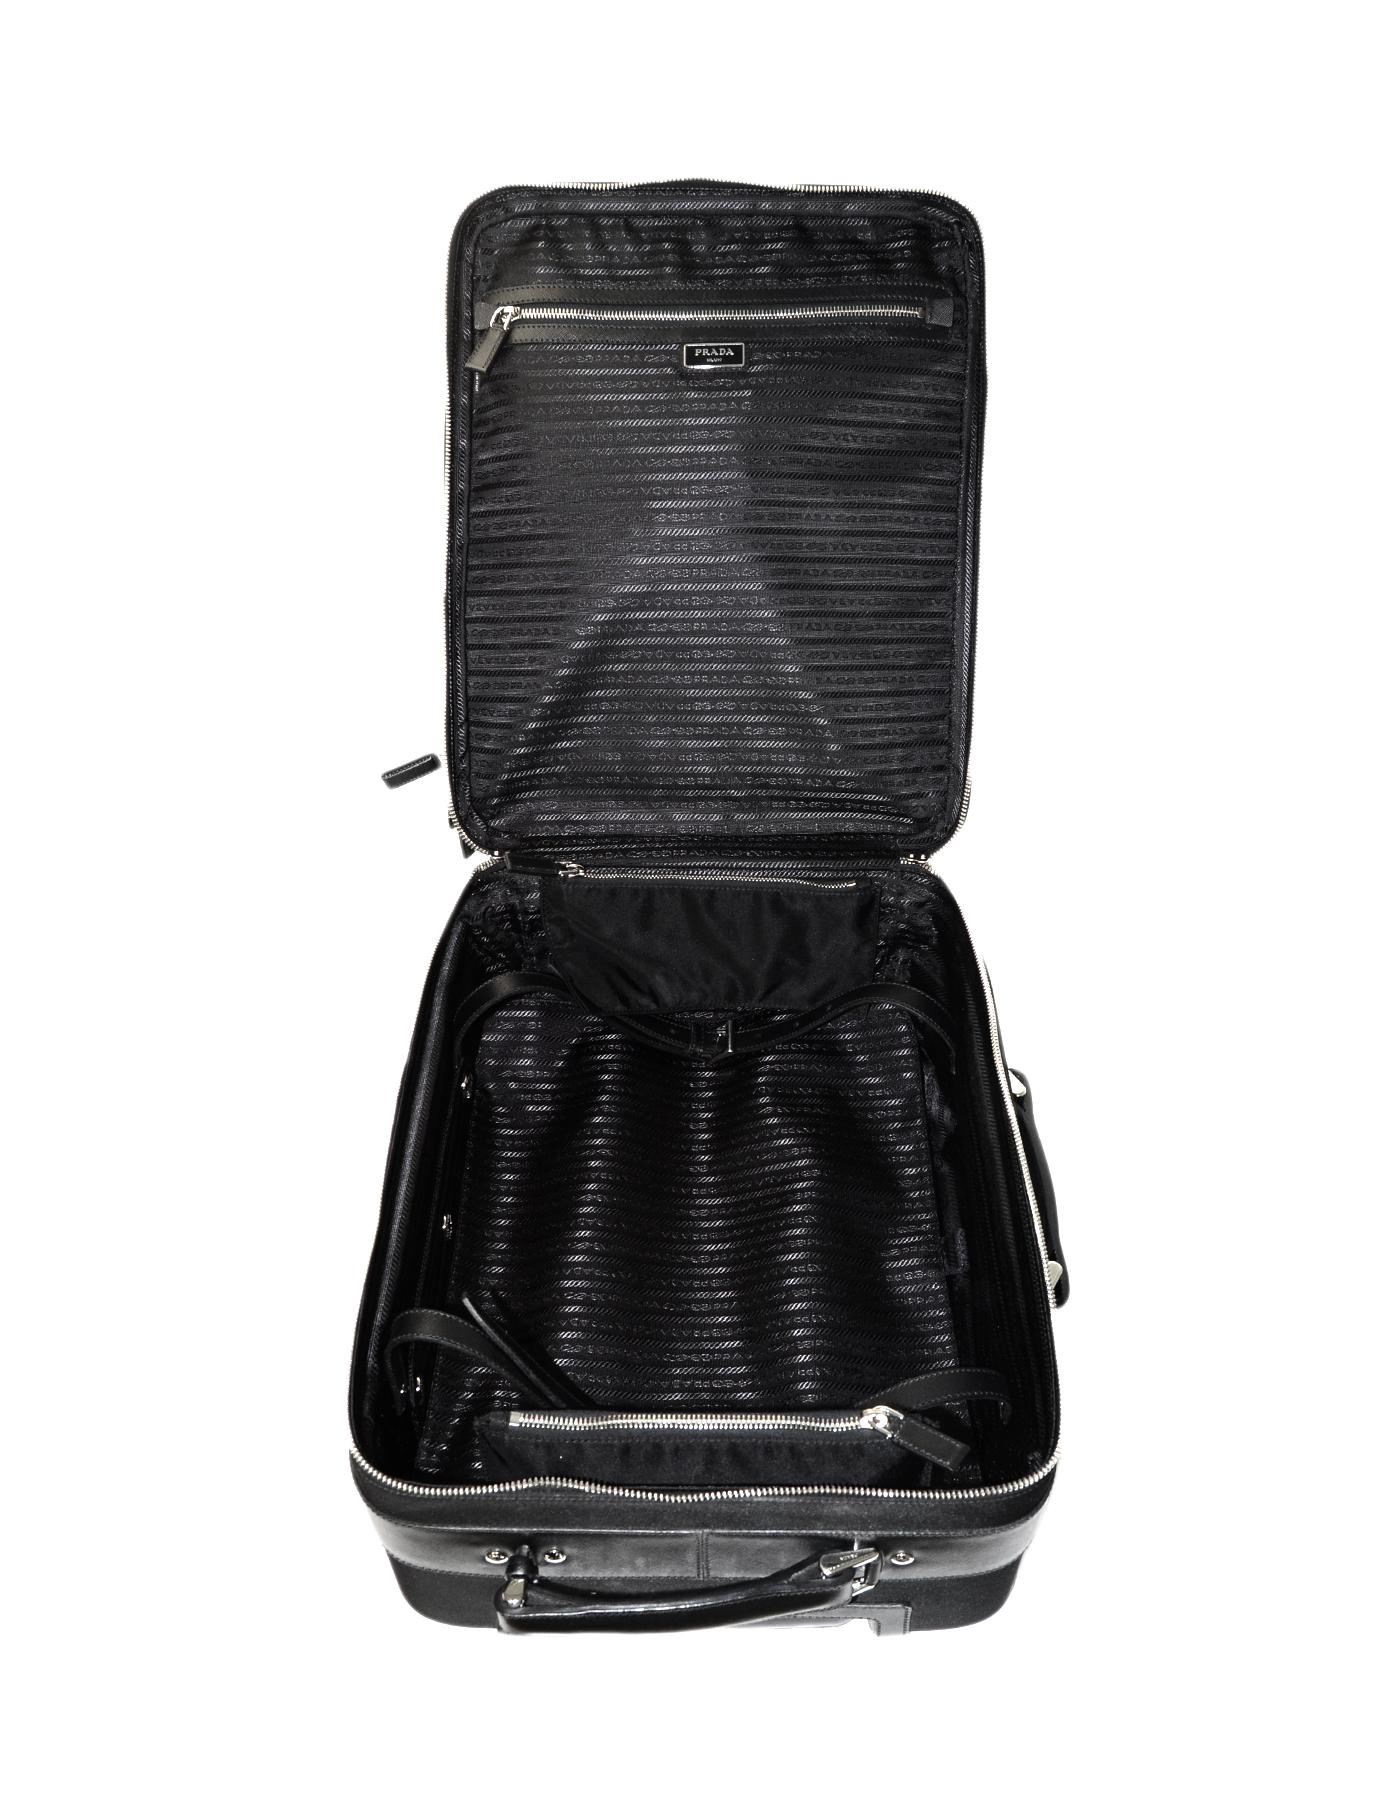 Prada Black Nylon/Saffiano Leather 40cm Carry-On Bag Rolling Luggage Suitcase 1